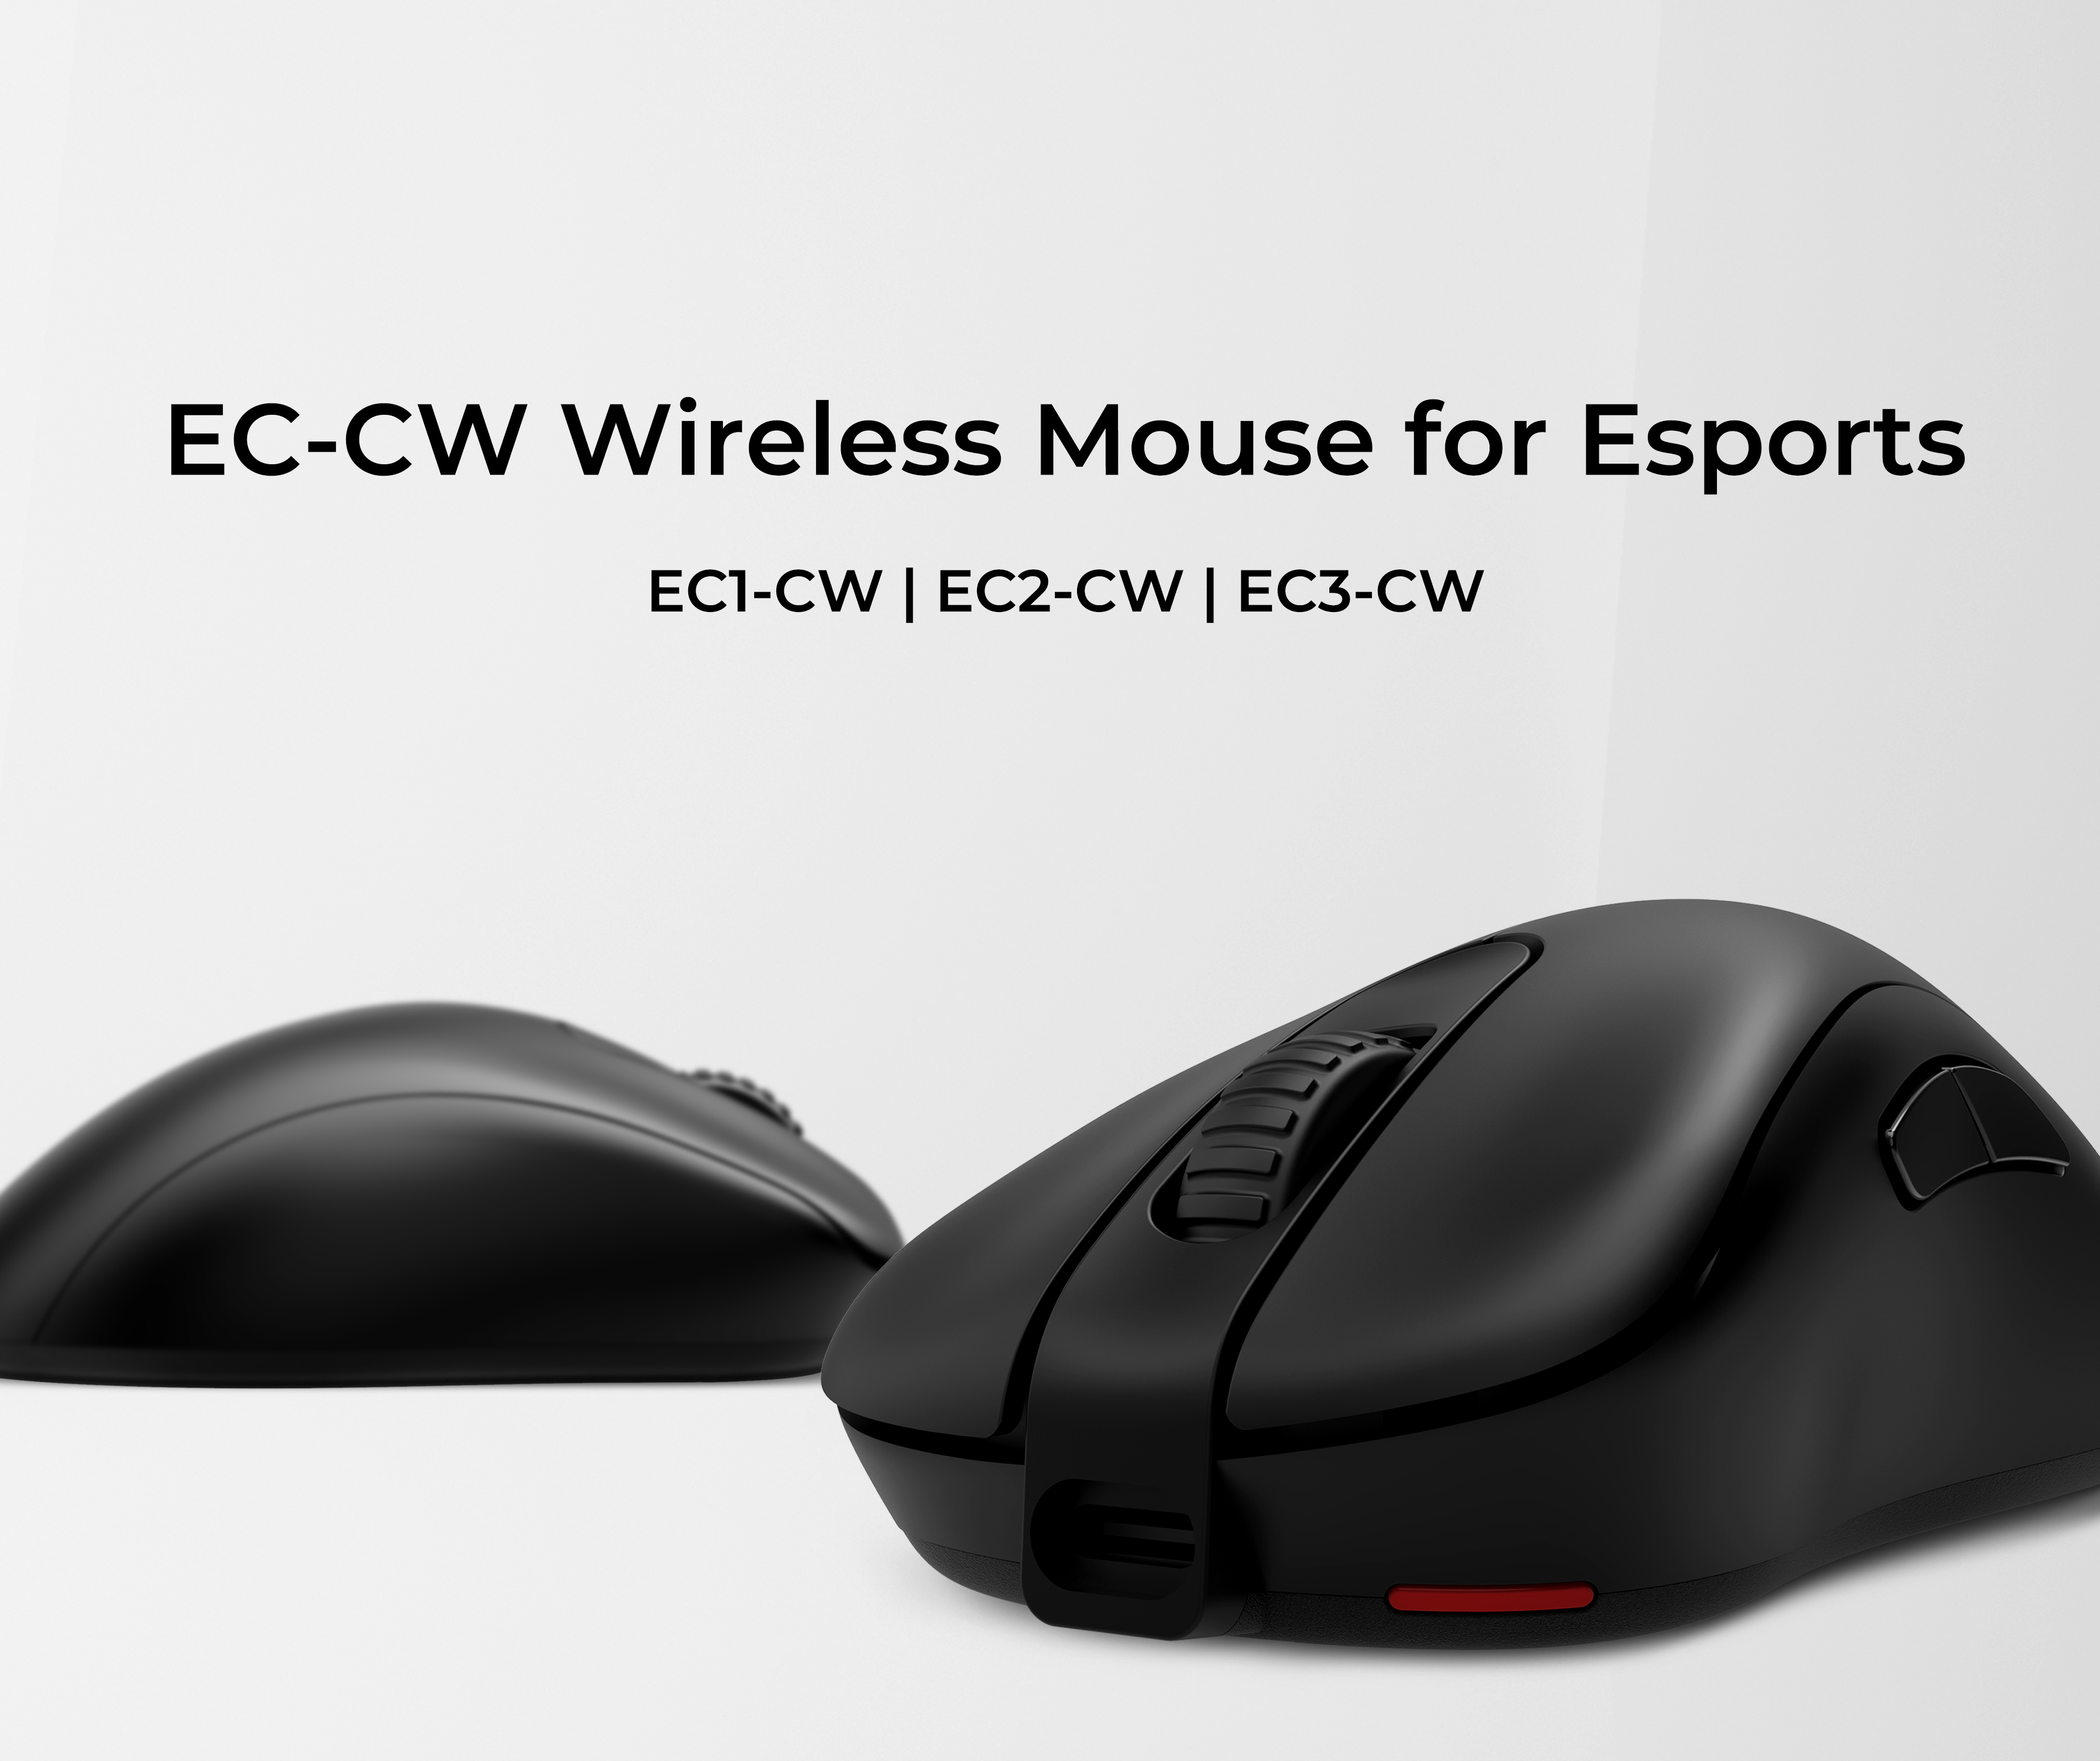 BenQ ZOWIEブランド初となる右利き用 
ワイヤレスゲーミングマウスとして、EC-CWシリーズ
『EC1-CW』『EC2-CW』『EC3-CW』発売決定！
～ 『EC2-CW』『EC3-CW』は5月18日(木)より
BenQ Direct Shopにて限定販売 ～